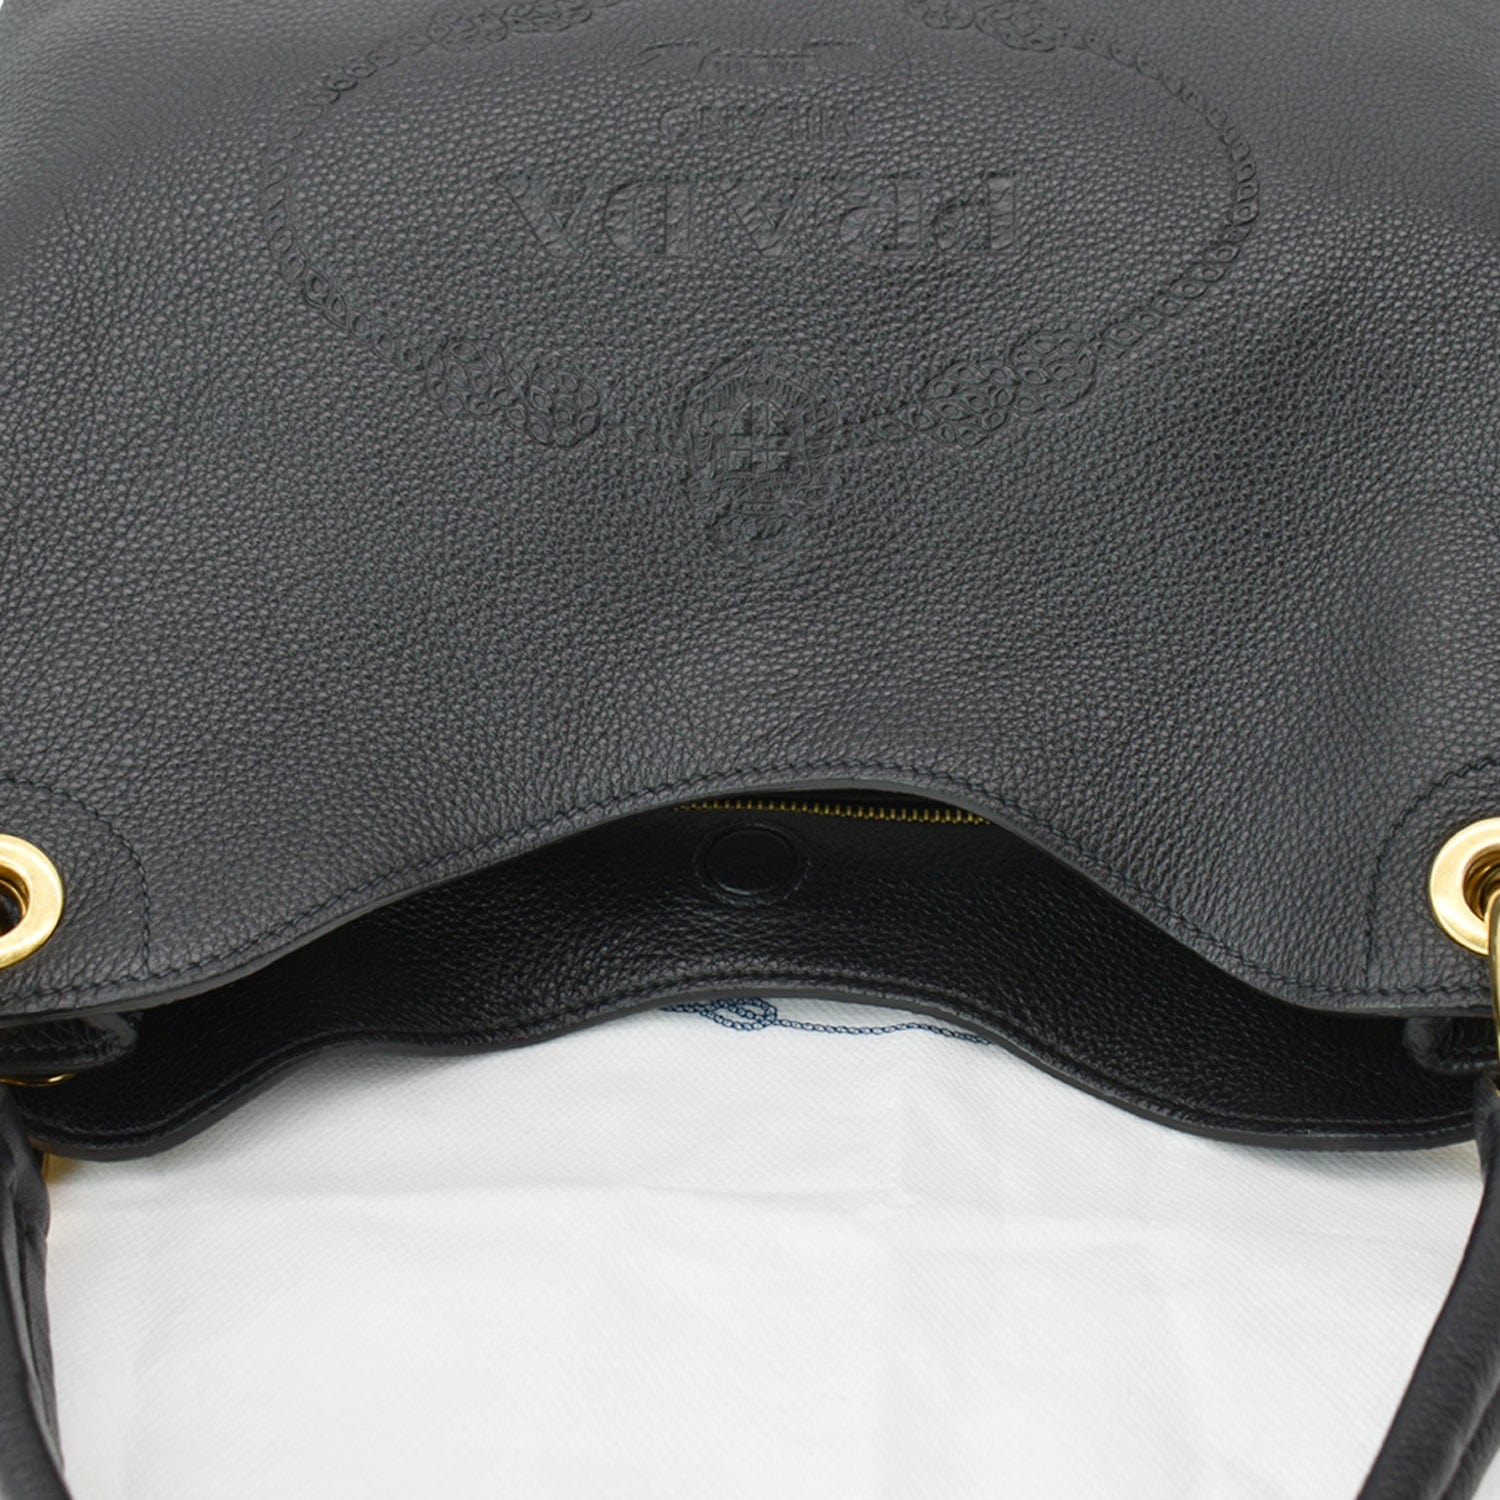 Prada Vitello Phenix Black Leather Embossed Logo Hobo Tote Bag